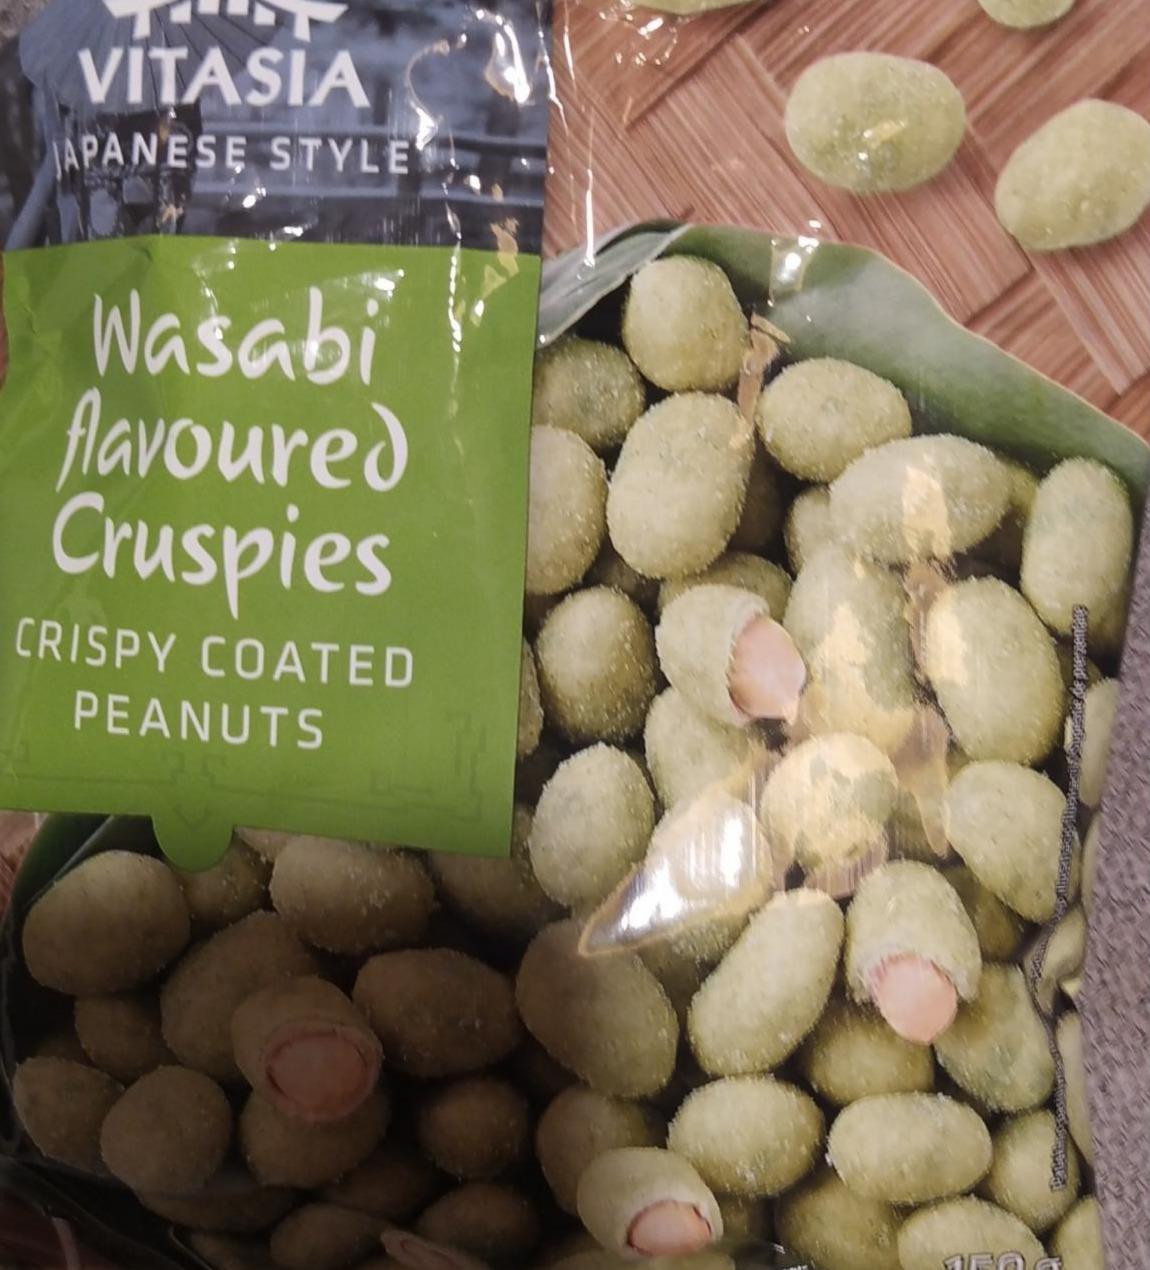 Zdjęcia - Wasabi flavoured Cruspies Vitasia